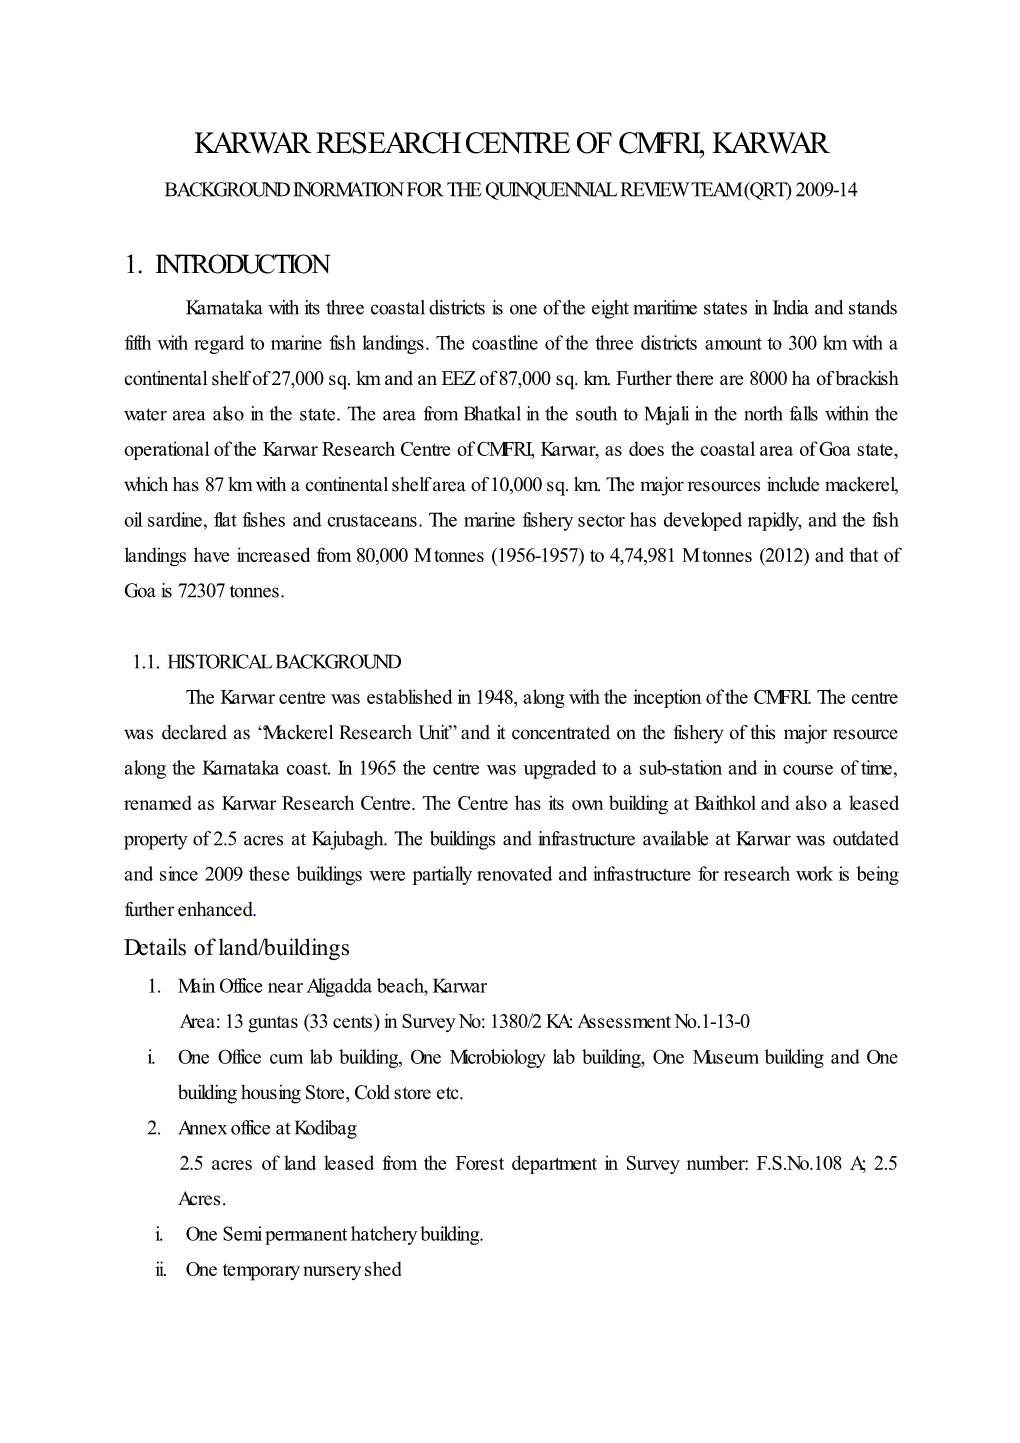 Karwar Research Centre of Cmfri, Karwar Background Inormation for the Quinquennial Review Team (Qrt) 2009-14